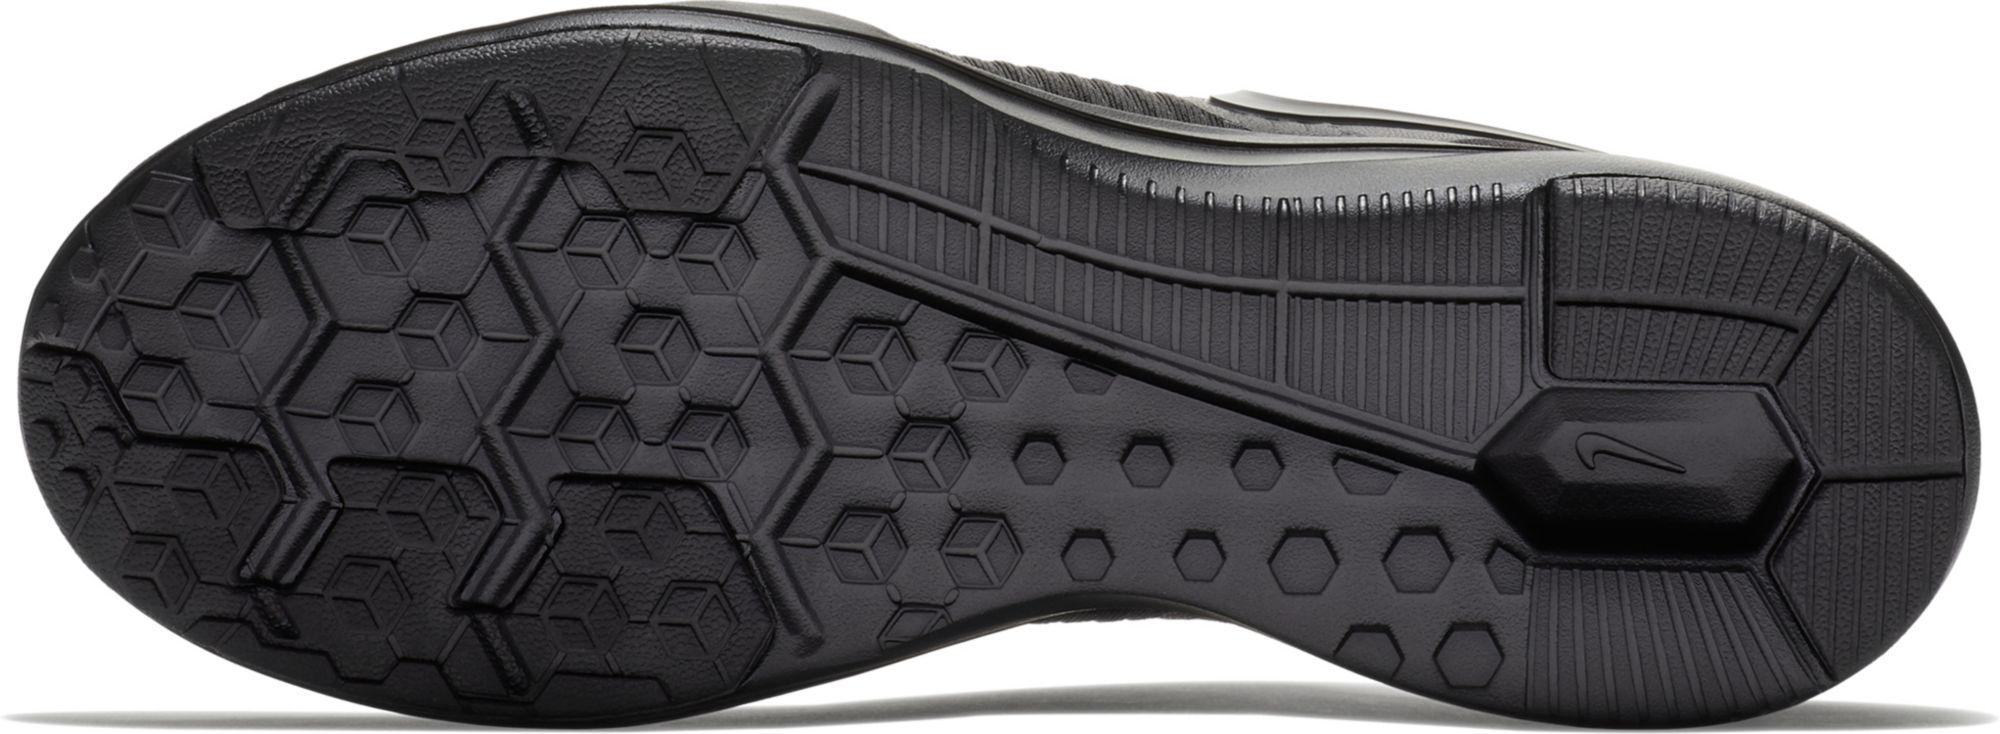 Nike Lace In-season Tr 8 Training Shoes in Black/Black (Black) - Lyst